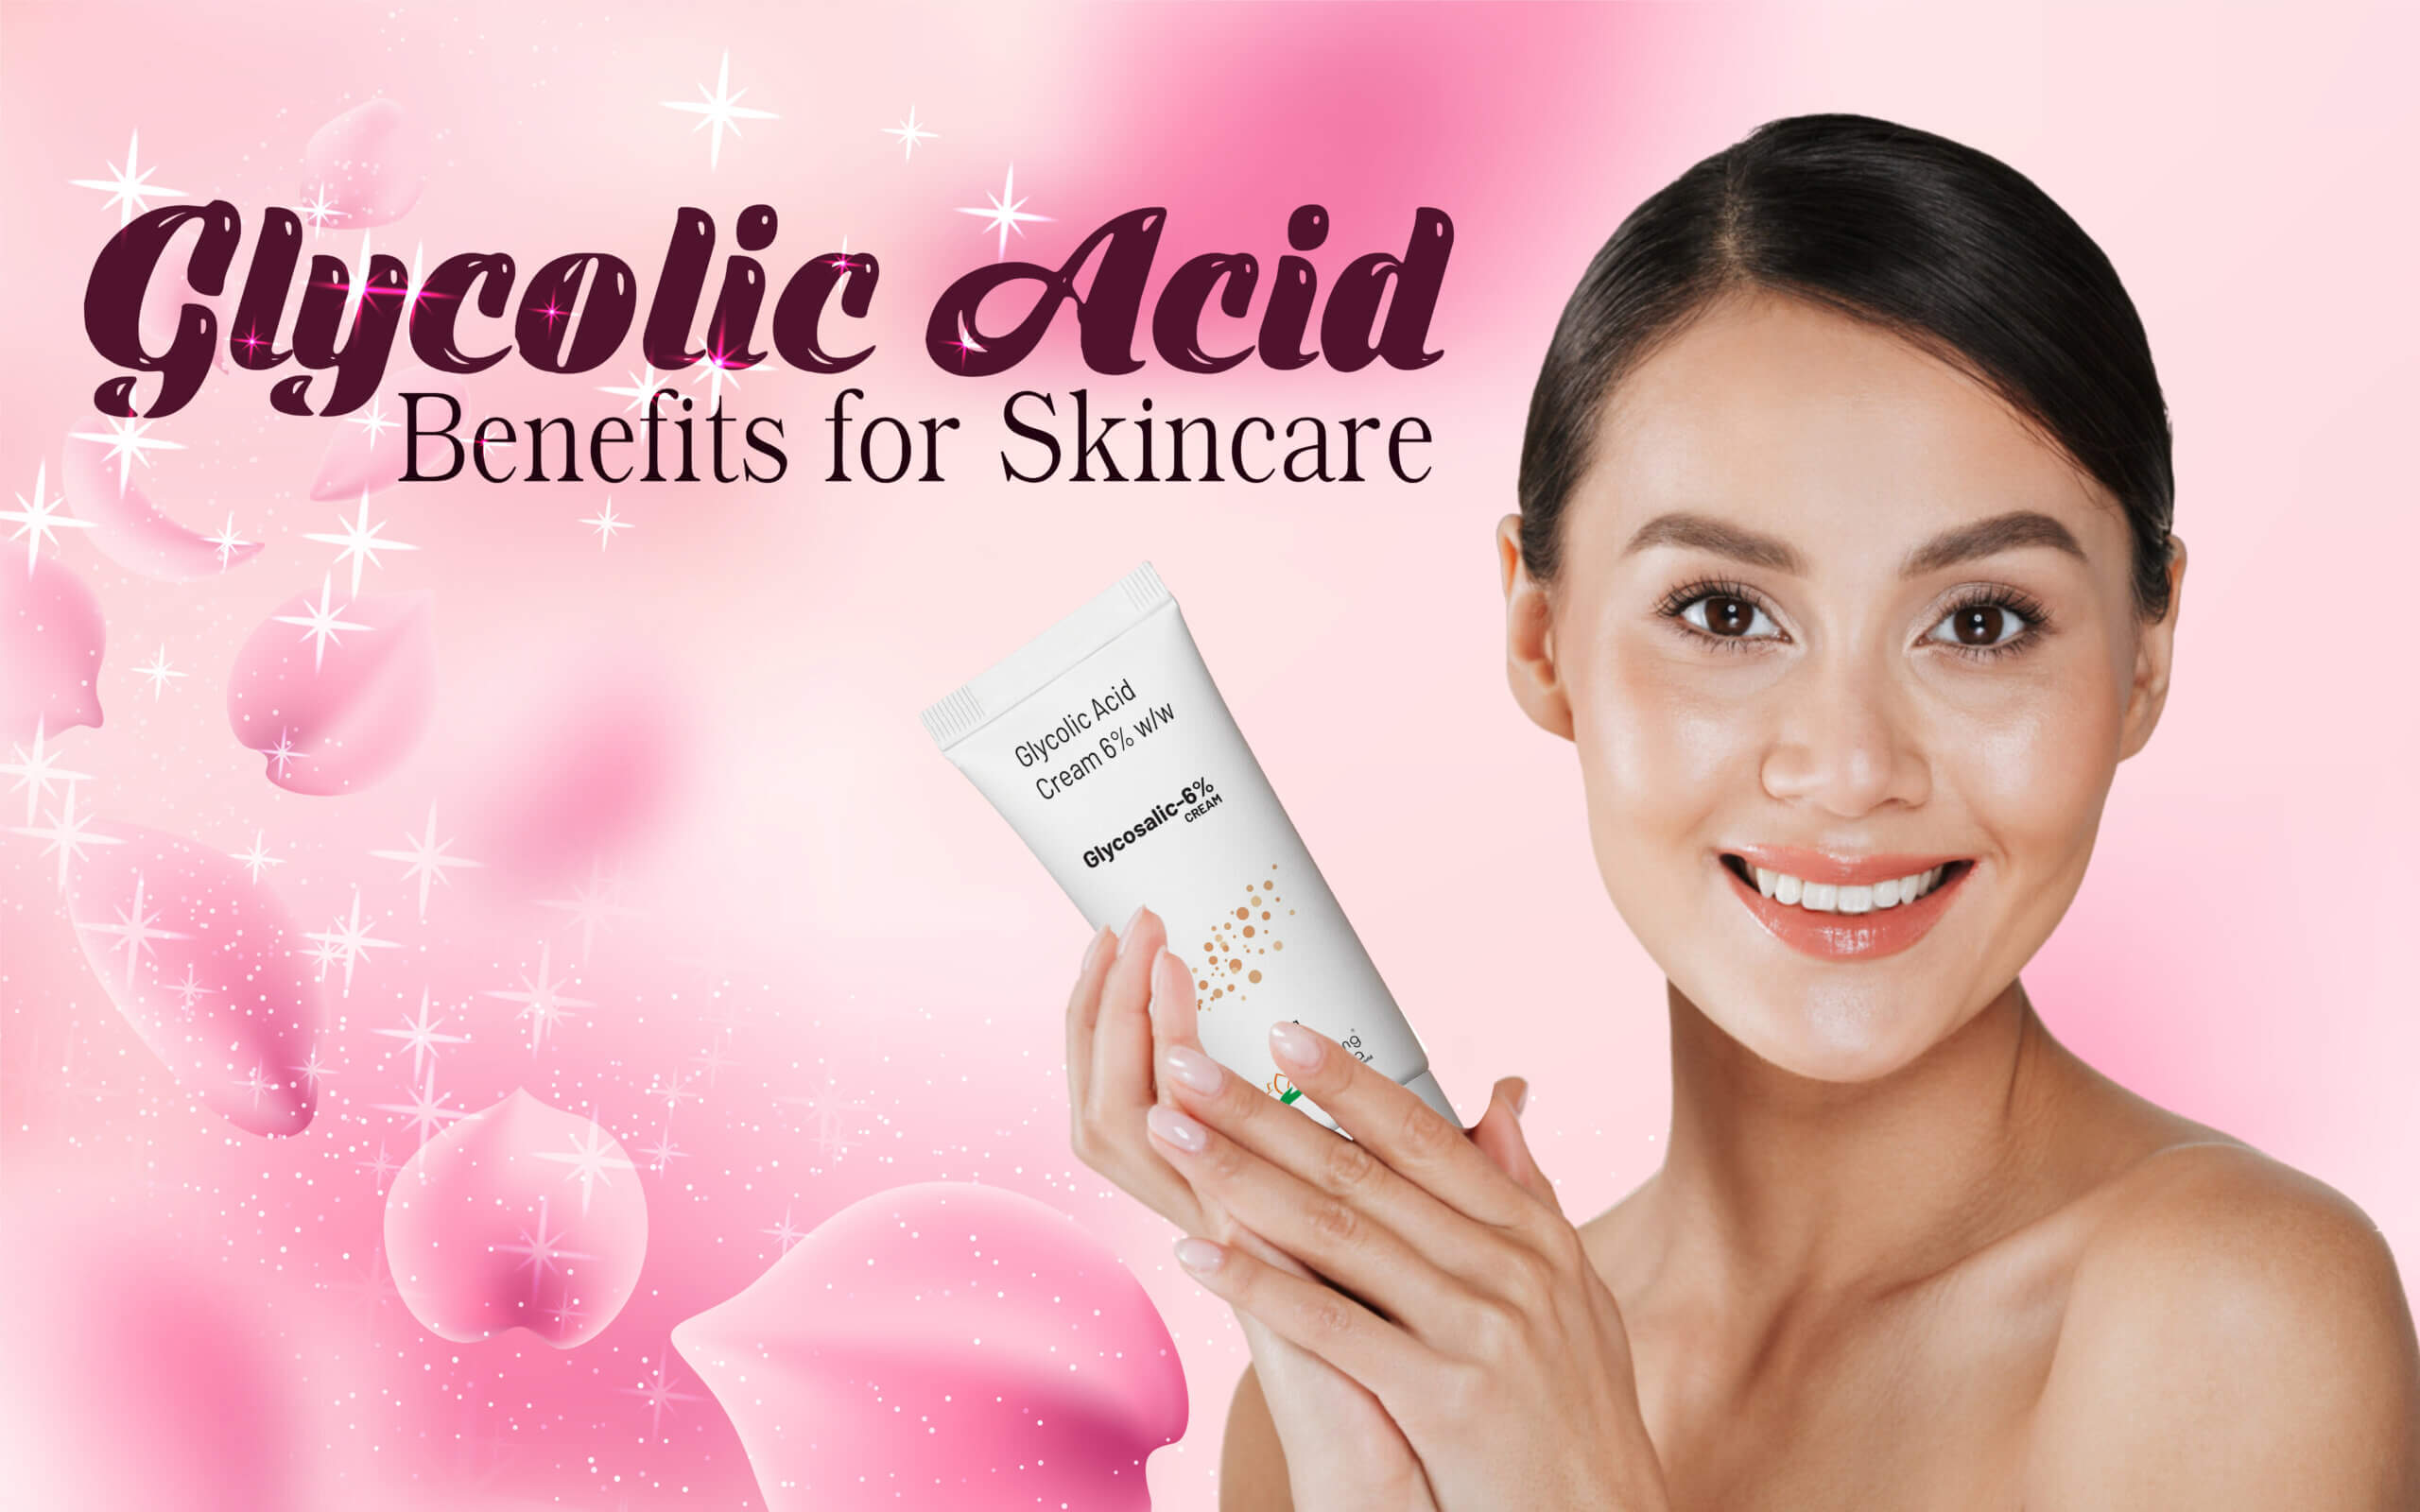 Glycolic Acid Benefits for Skincare